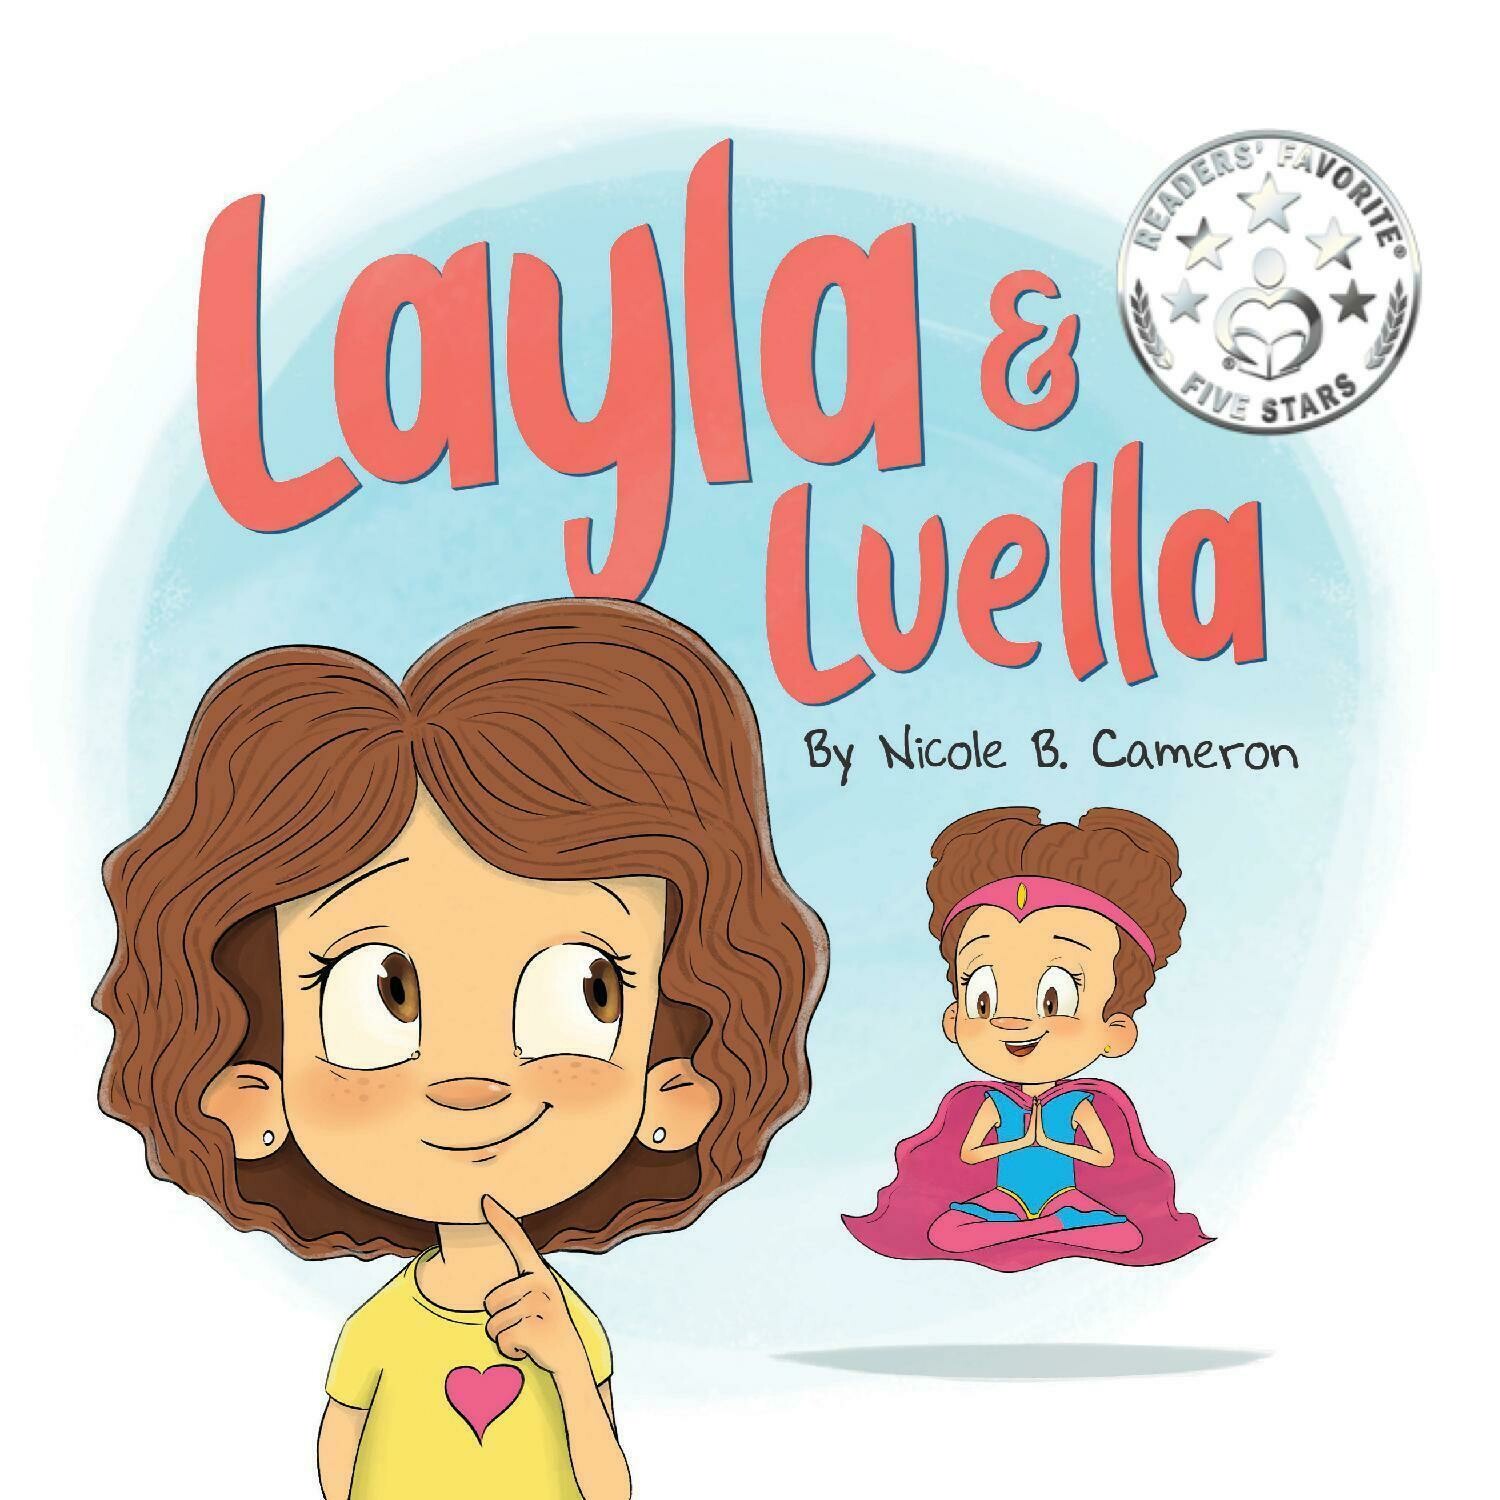 Layla & Luella "Signed Copy"